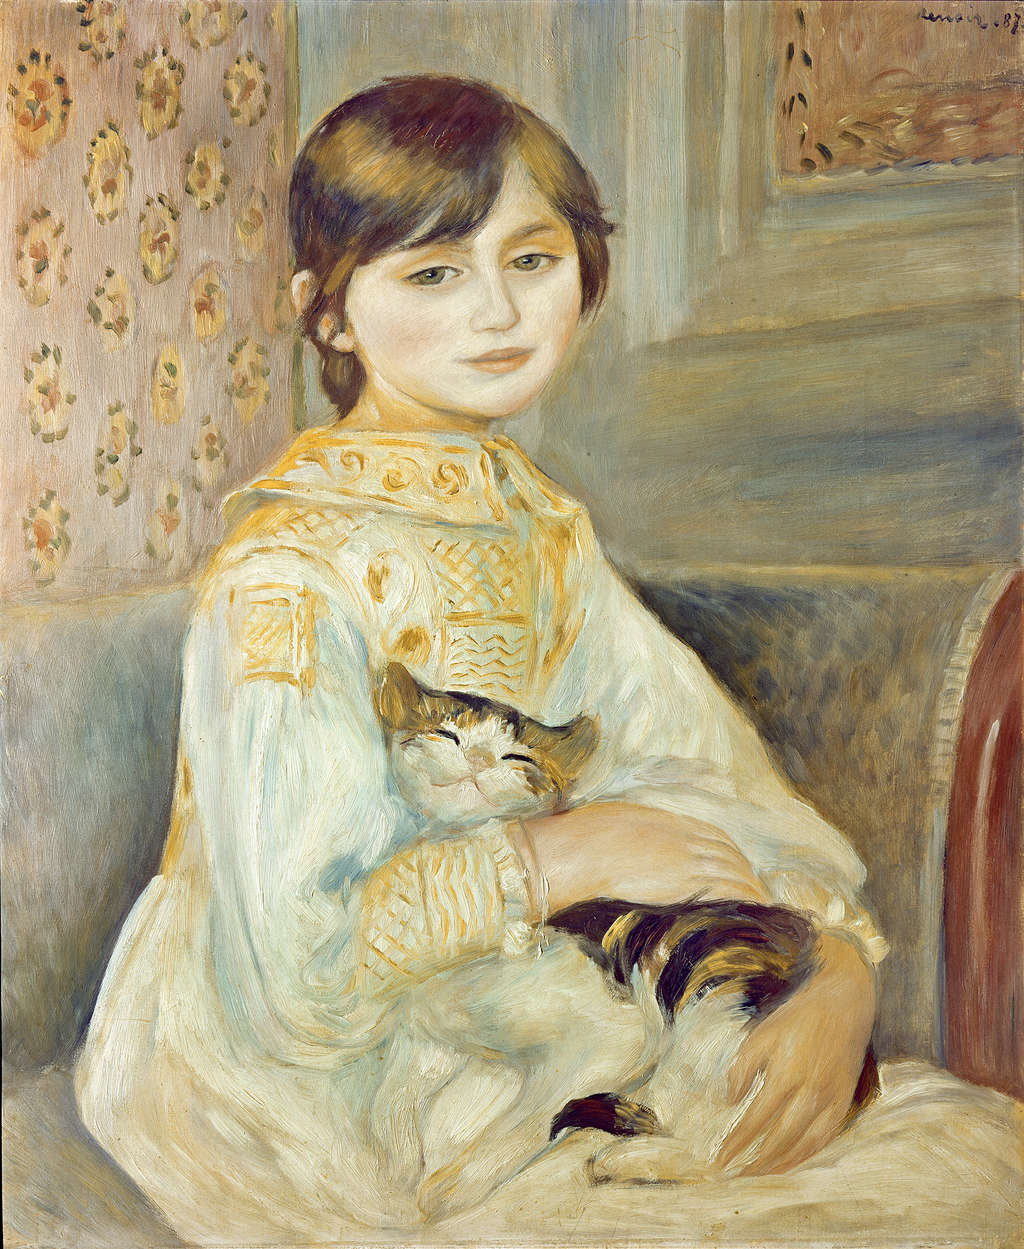             Mural "Mademoiselle Julie con gato" de Pierre Auguste Renoir
        